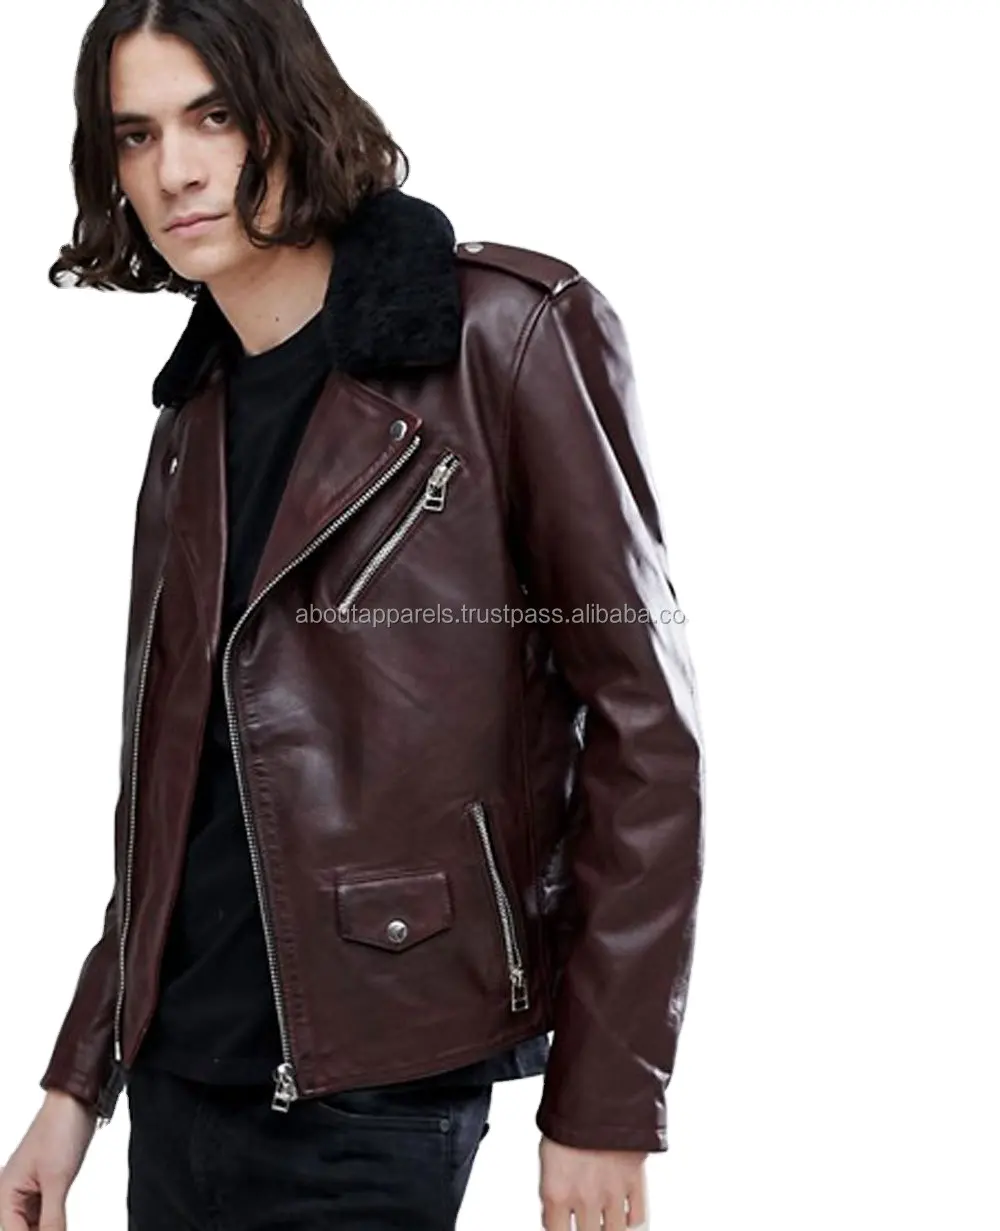 Jaqueta de motocicleta, casaco de couro de pele de carneiro genuíno